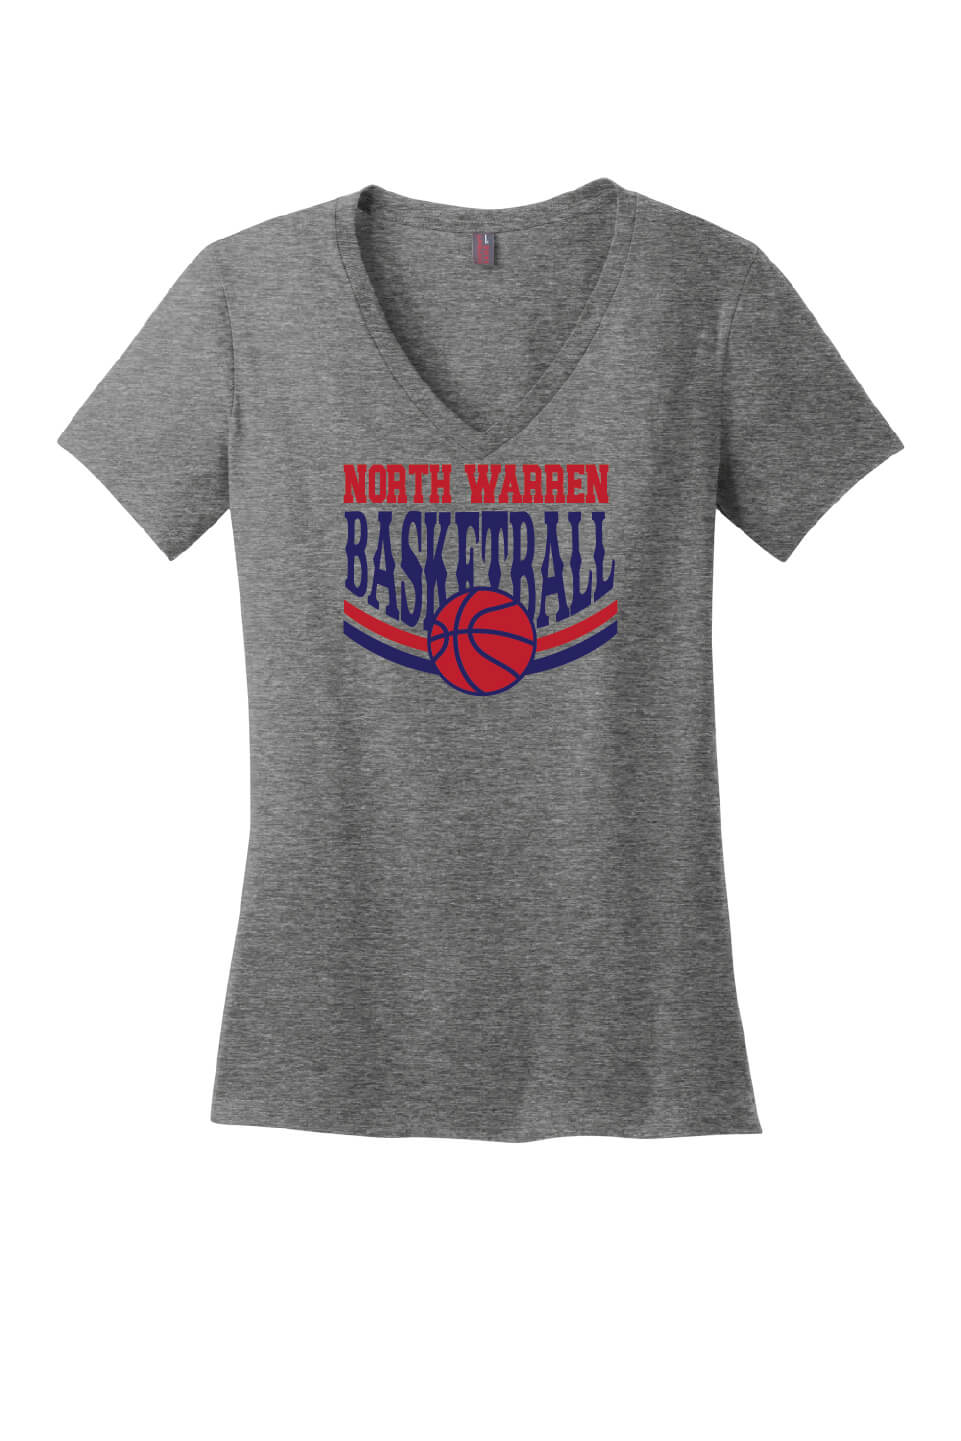 NW Basketball V-Neck Short Sleeve T-Shirt (Ladies) gray